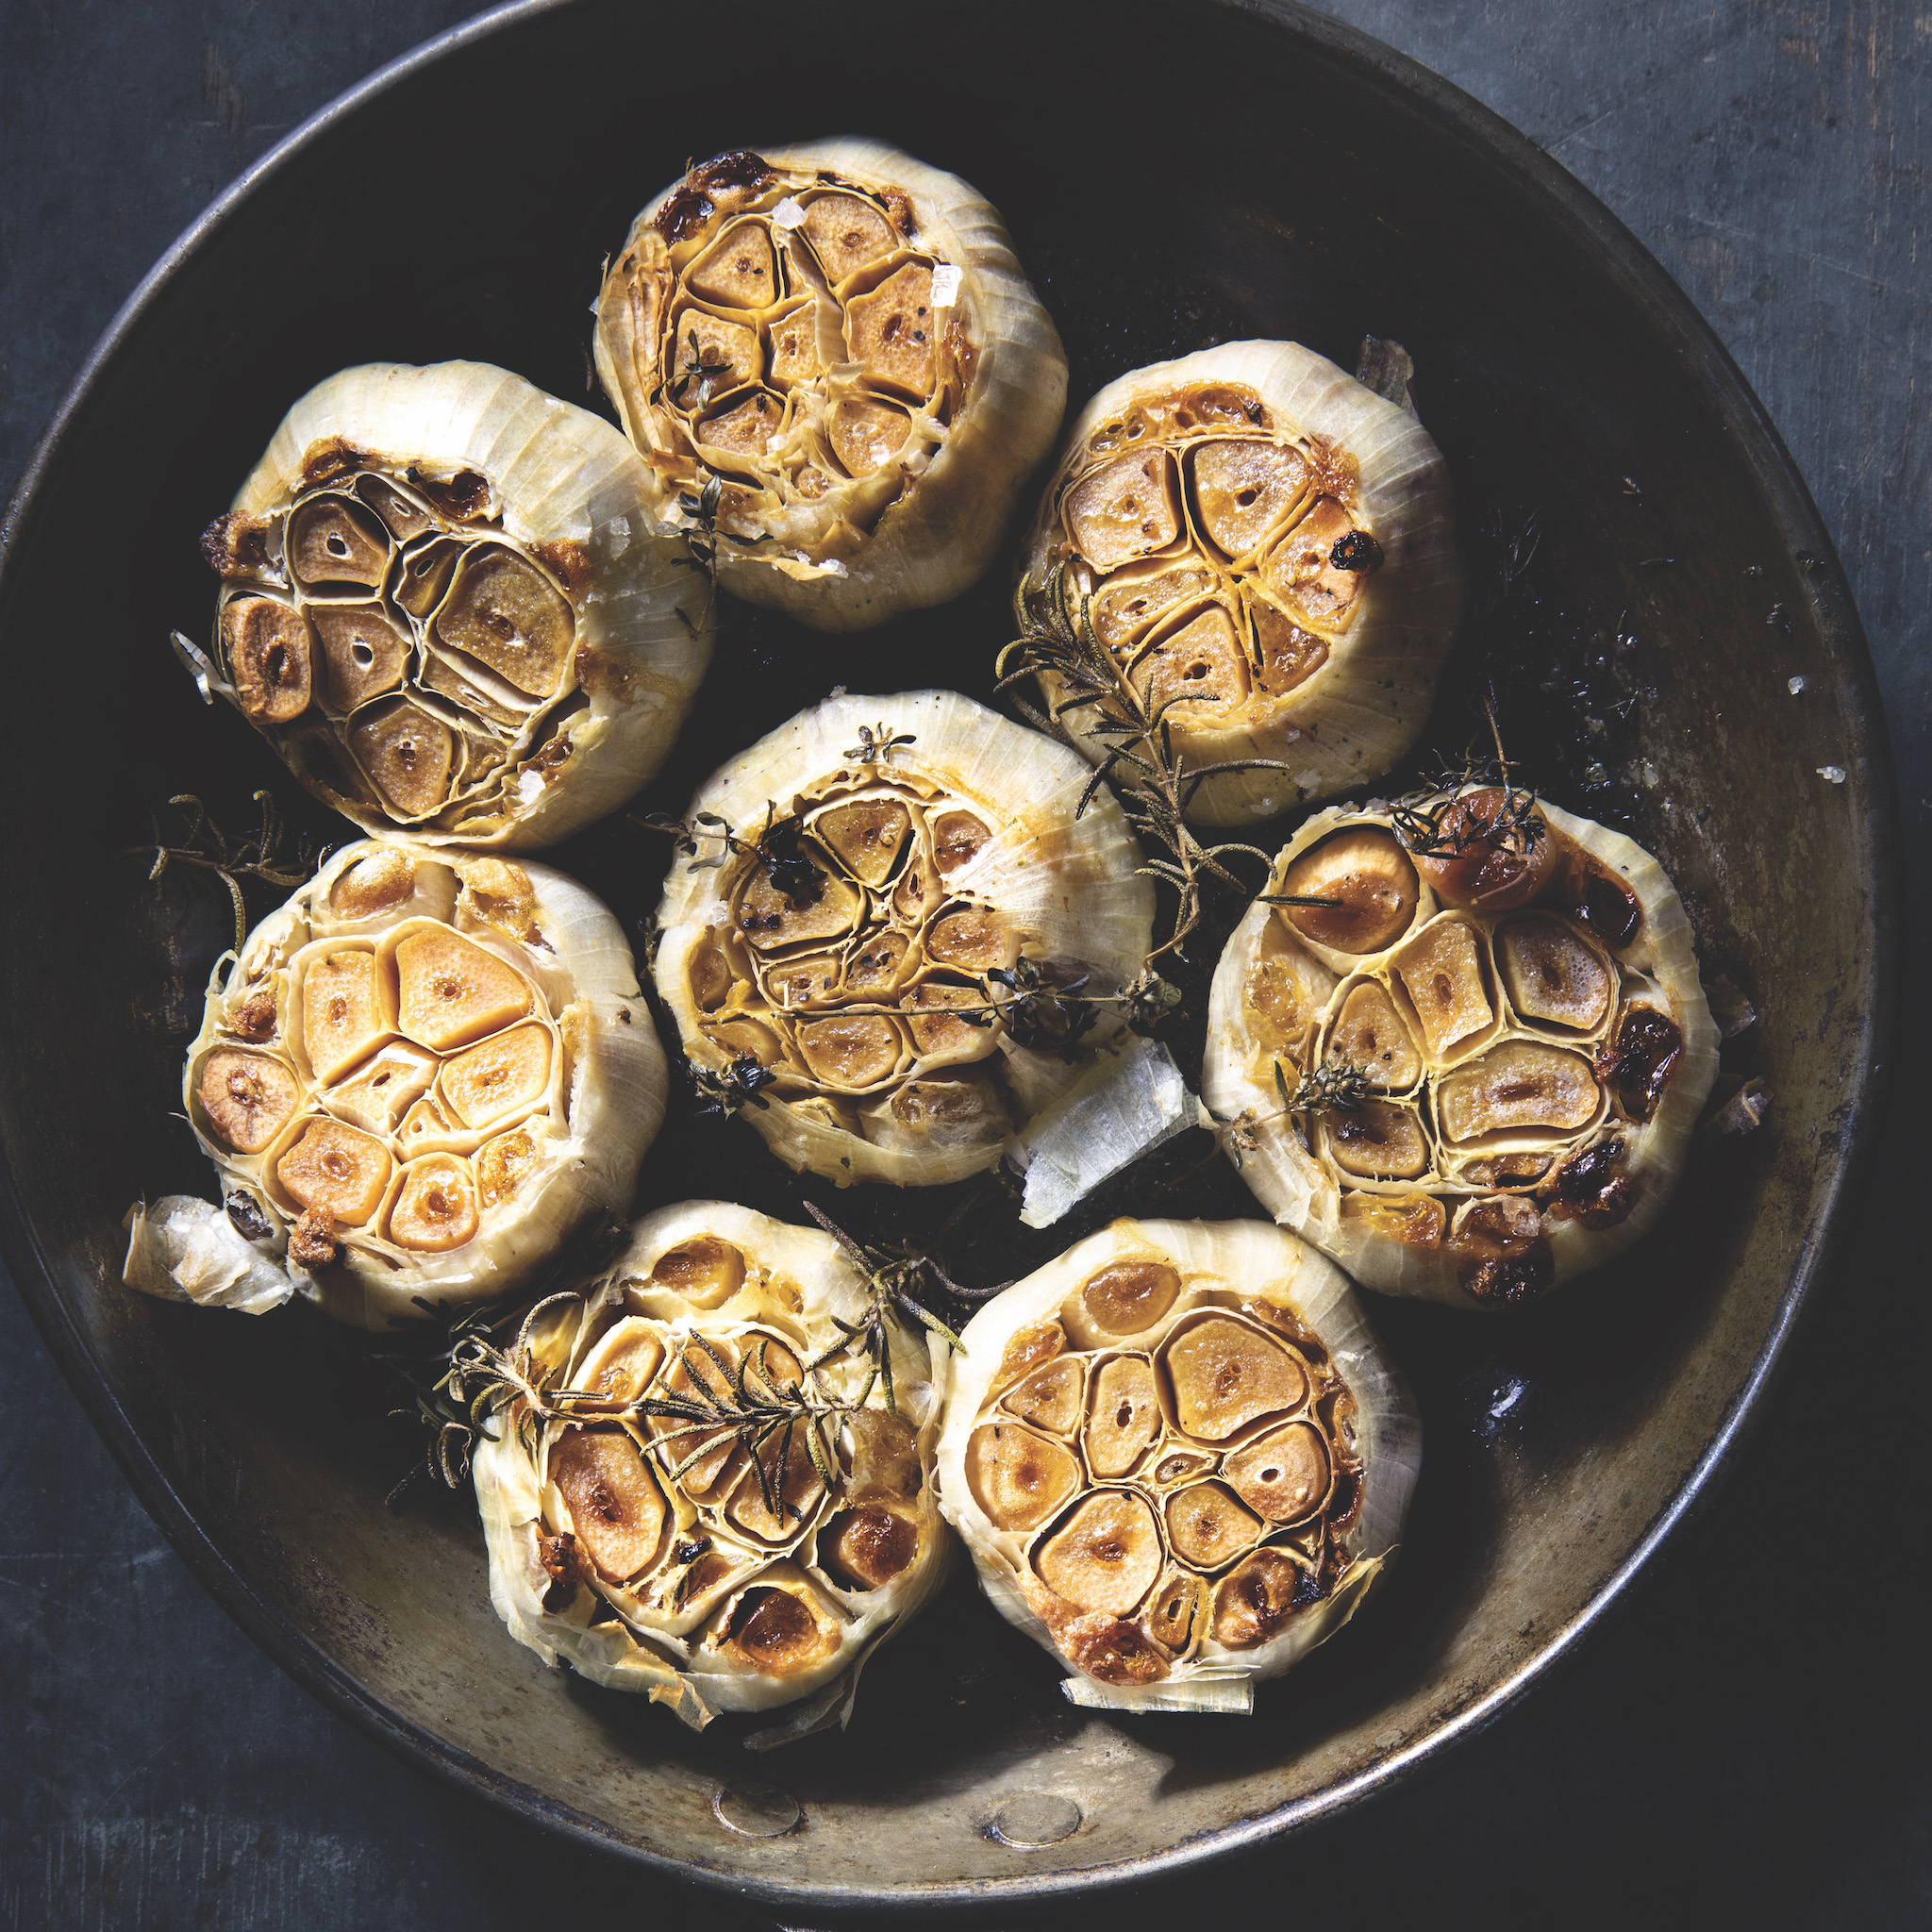 Joanna Gaines' Roasted Garlic Bulbs